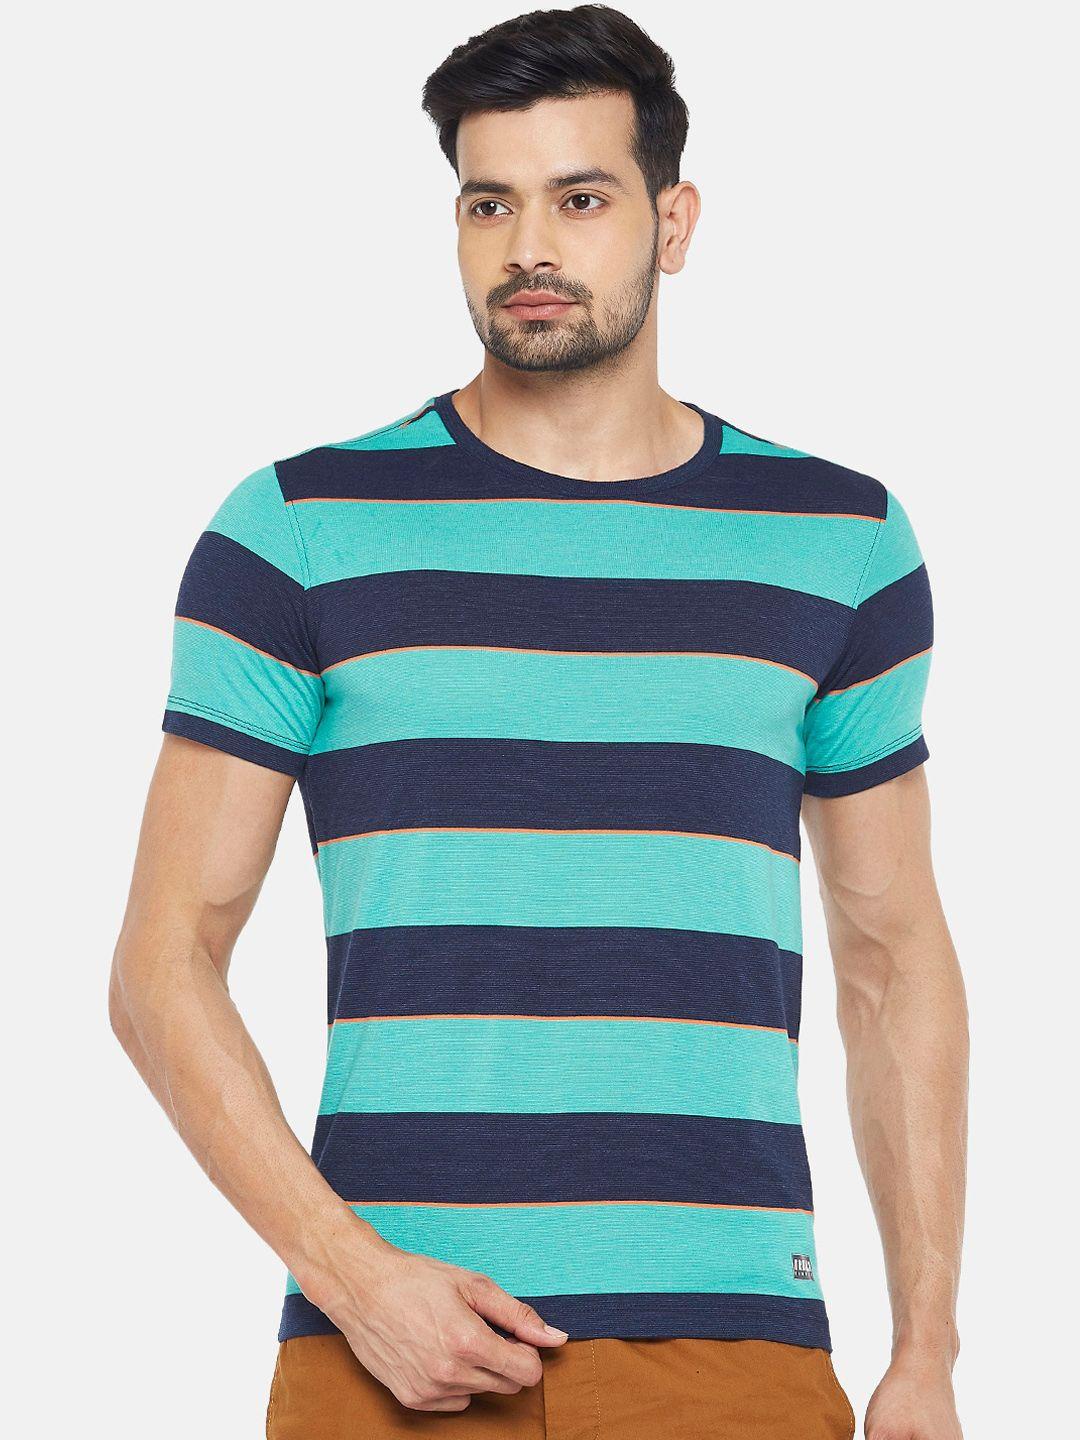 urban ranger by pantaloons men peach-coloured striped round neck t-shirt